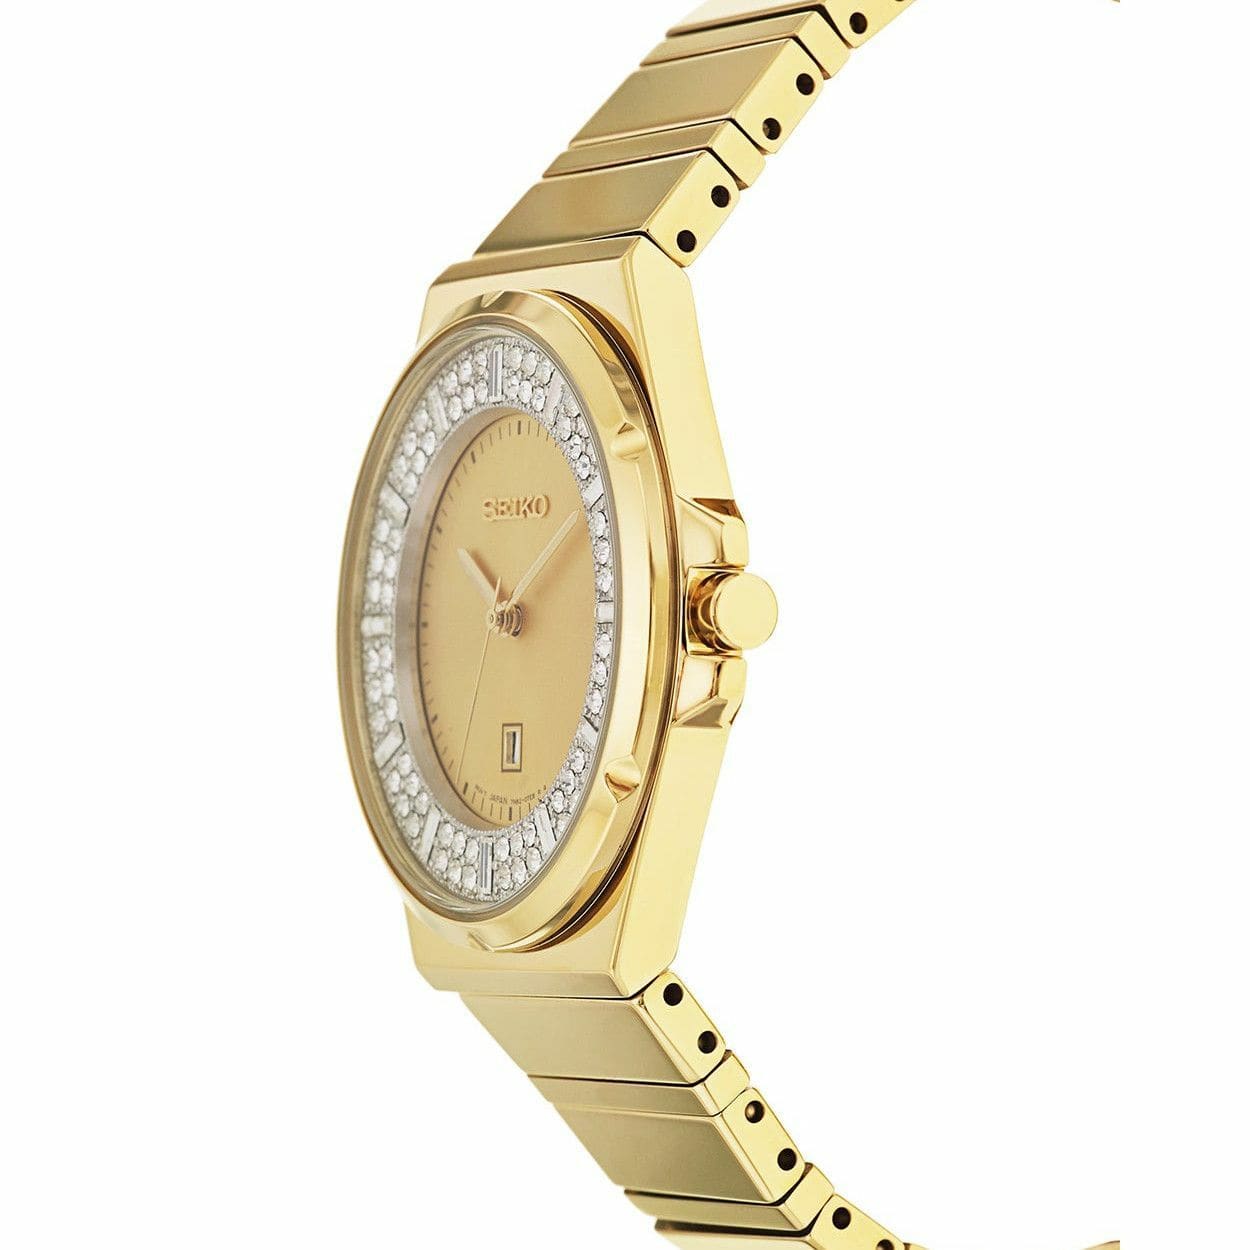 Seiko SXDF72 Gold Stainless Steel Champagne Swarovski Crystal Accent Dial Women's Watch 029665169587